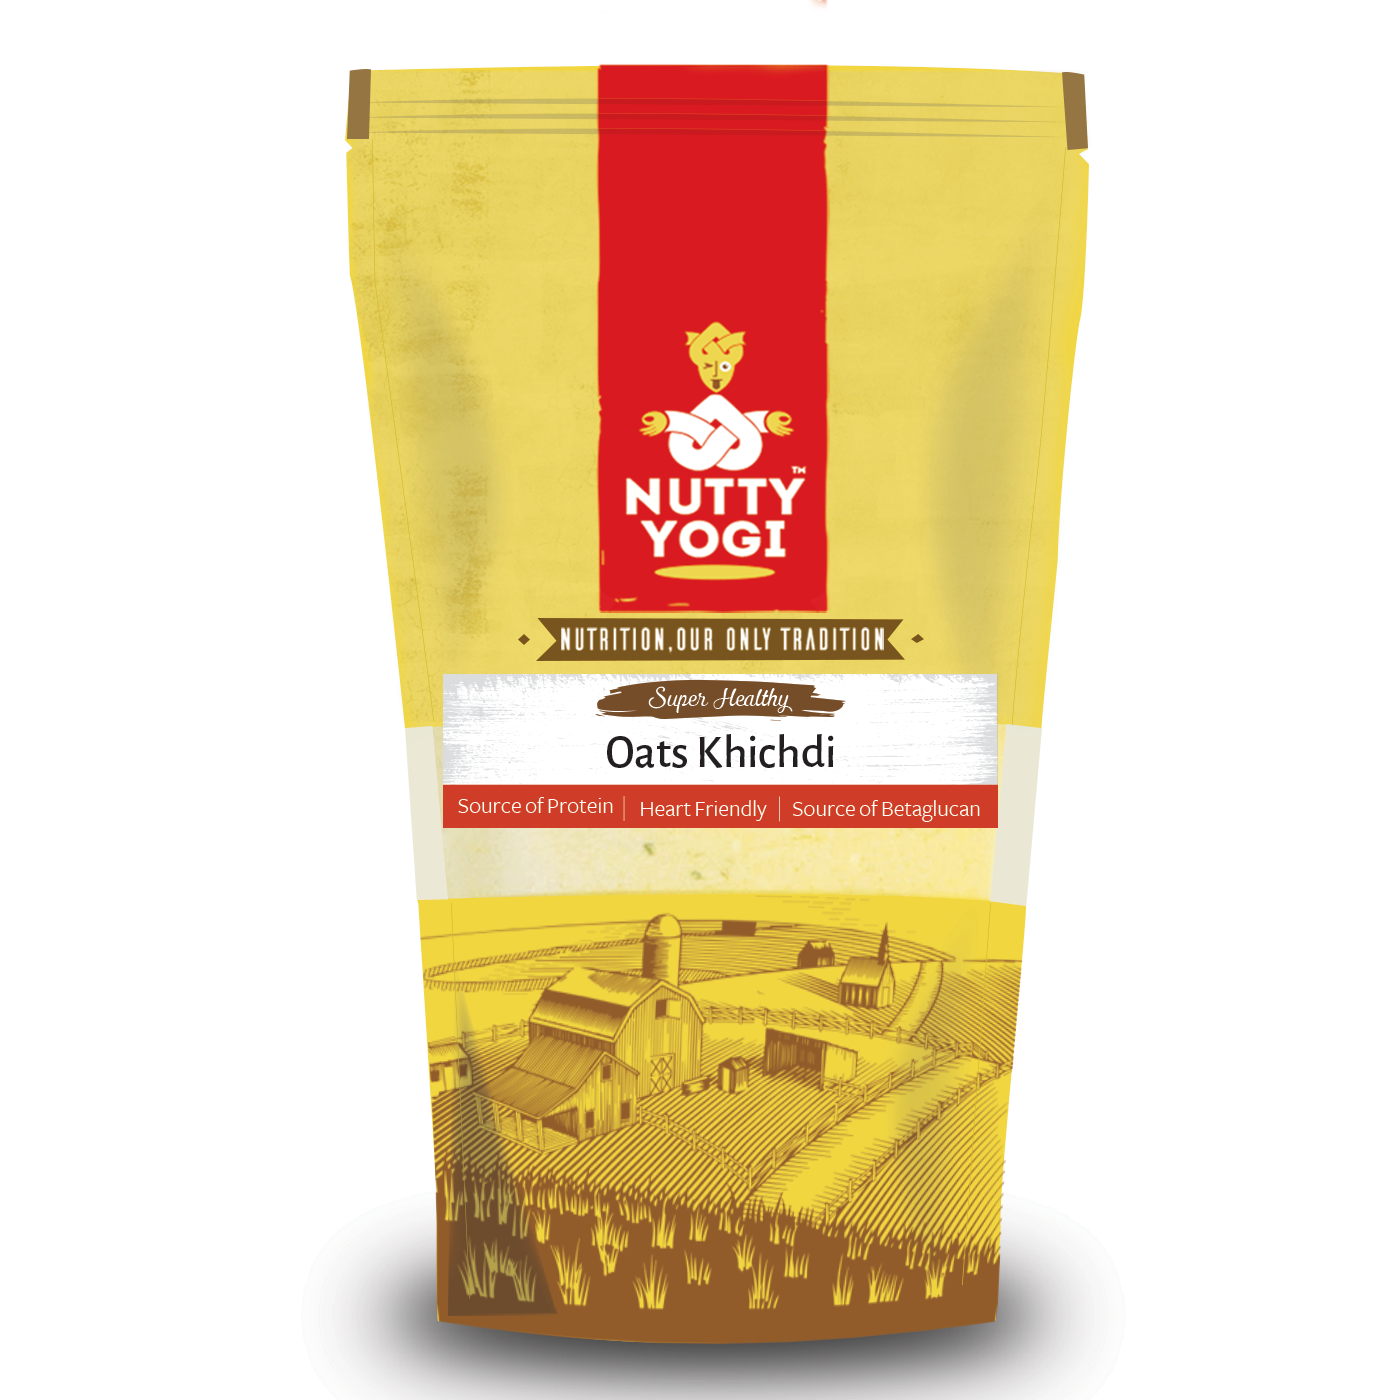 Nutty Yogi Oats Khichdi 400g